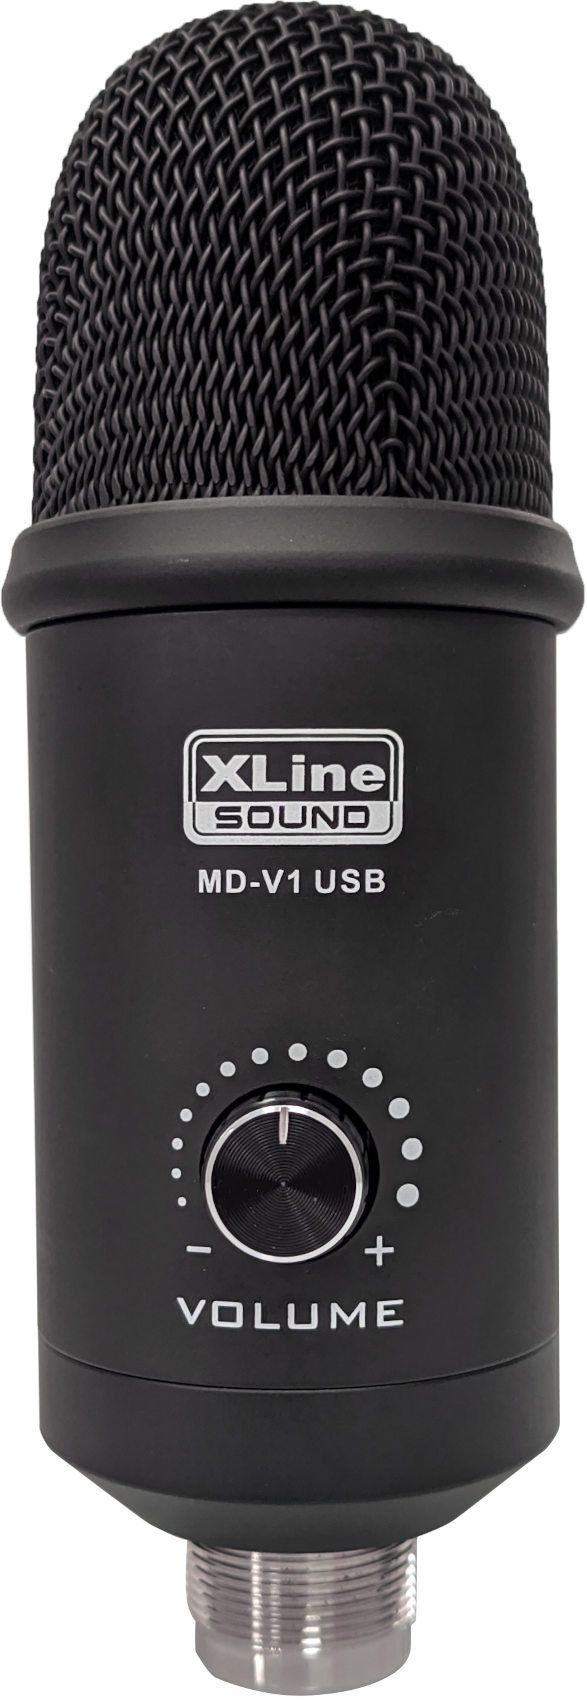 Xline MD-V1 USB STREAM - фото 2